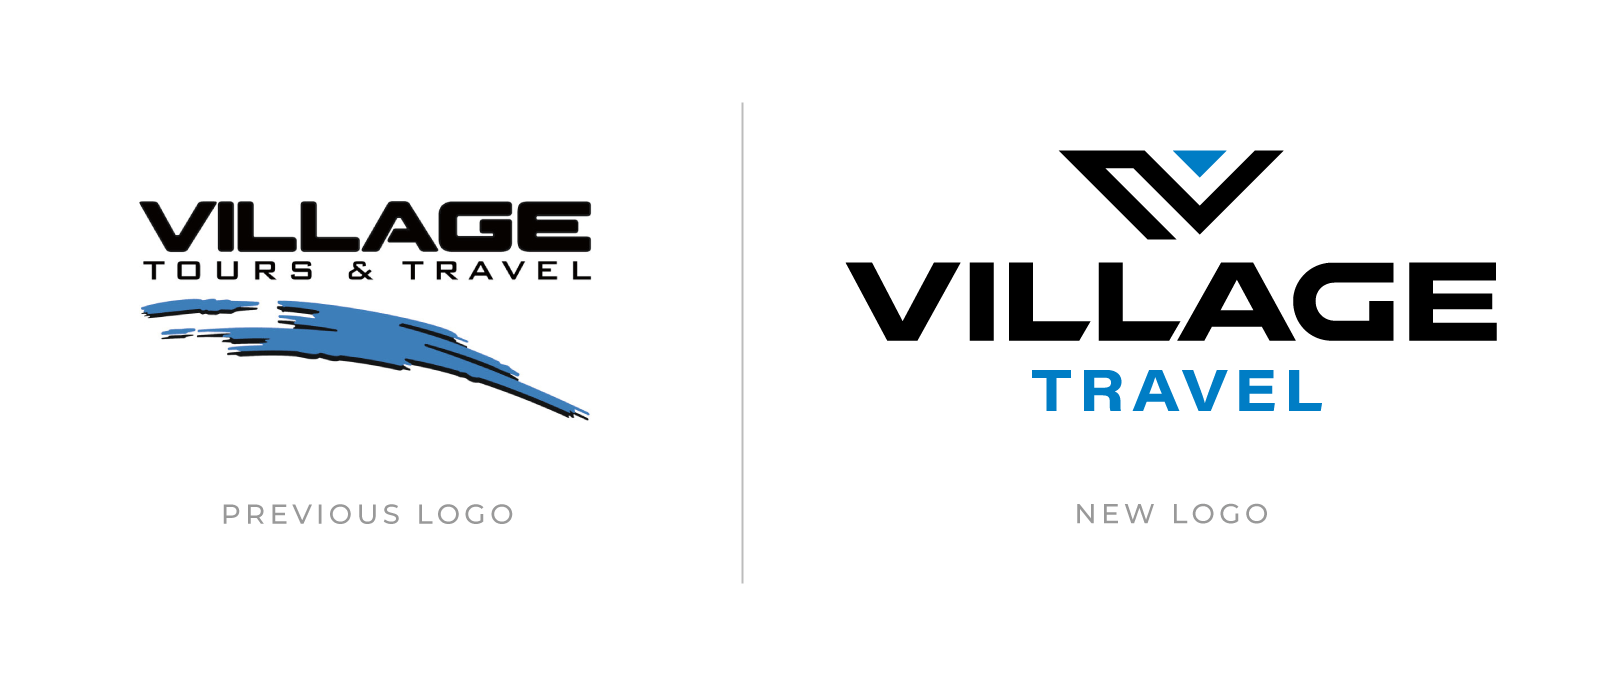 village travel logo transformation